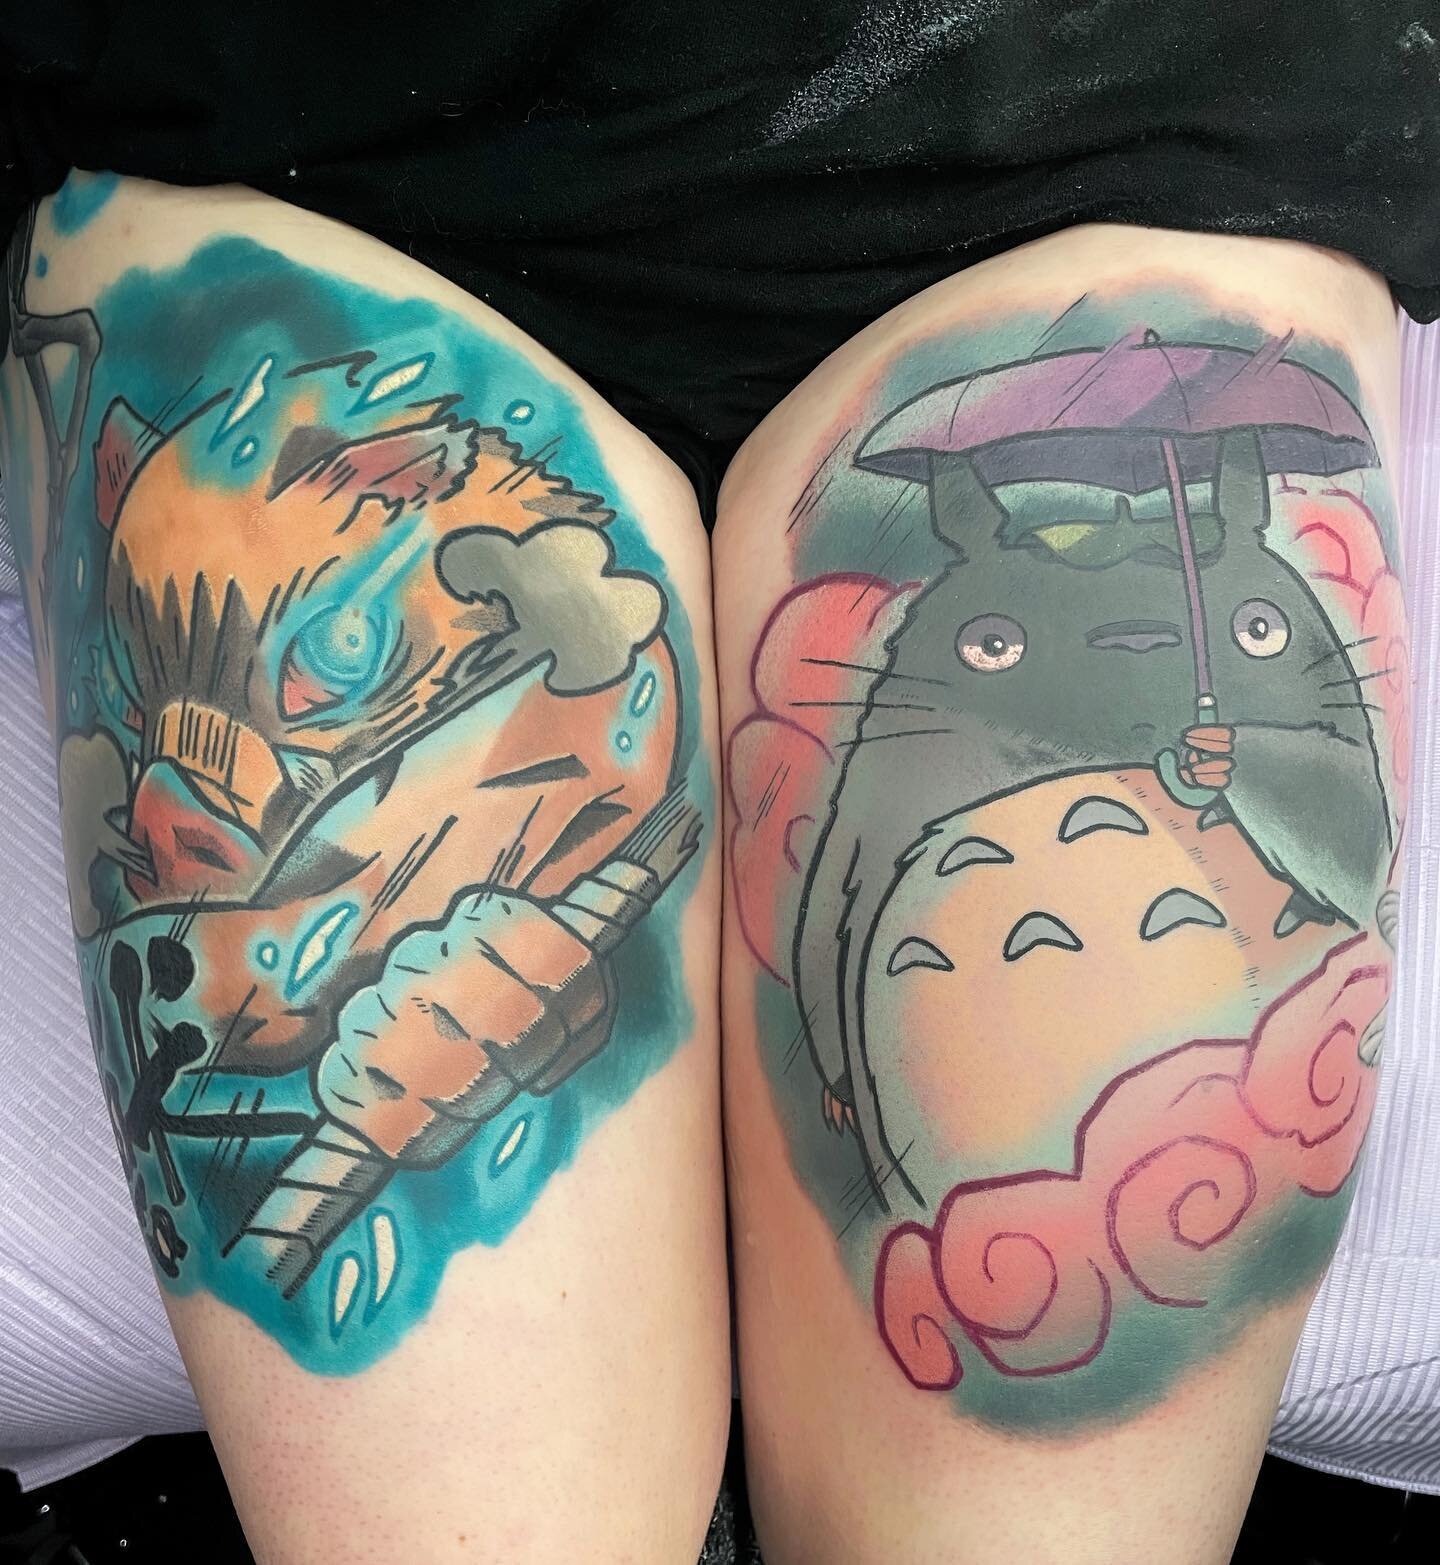 Just a couple of animals #totoro #demonslayer #inosuke #ghibli #anime #animetattoo #tattoo #tattoos #tat #love #art #fanart #ink #aot #jjk #dbs #cute #girlswithtattoos #animegirl